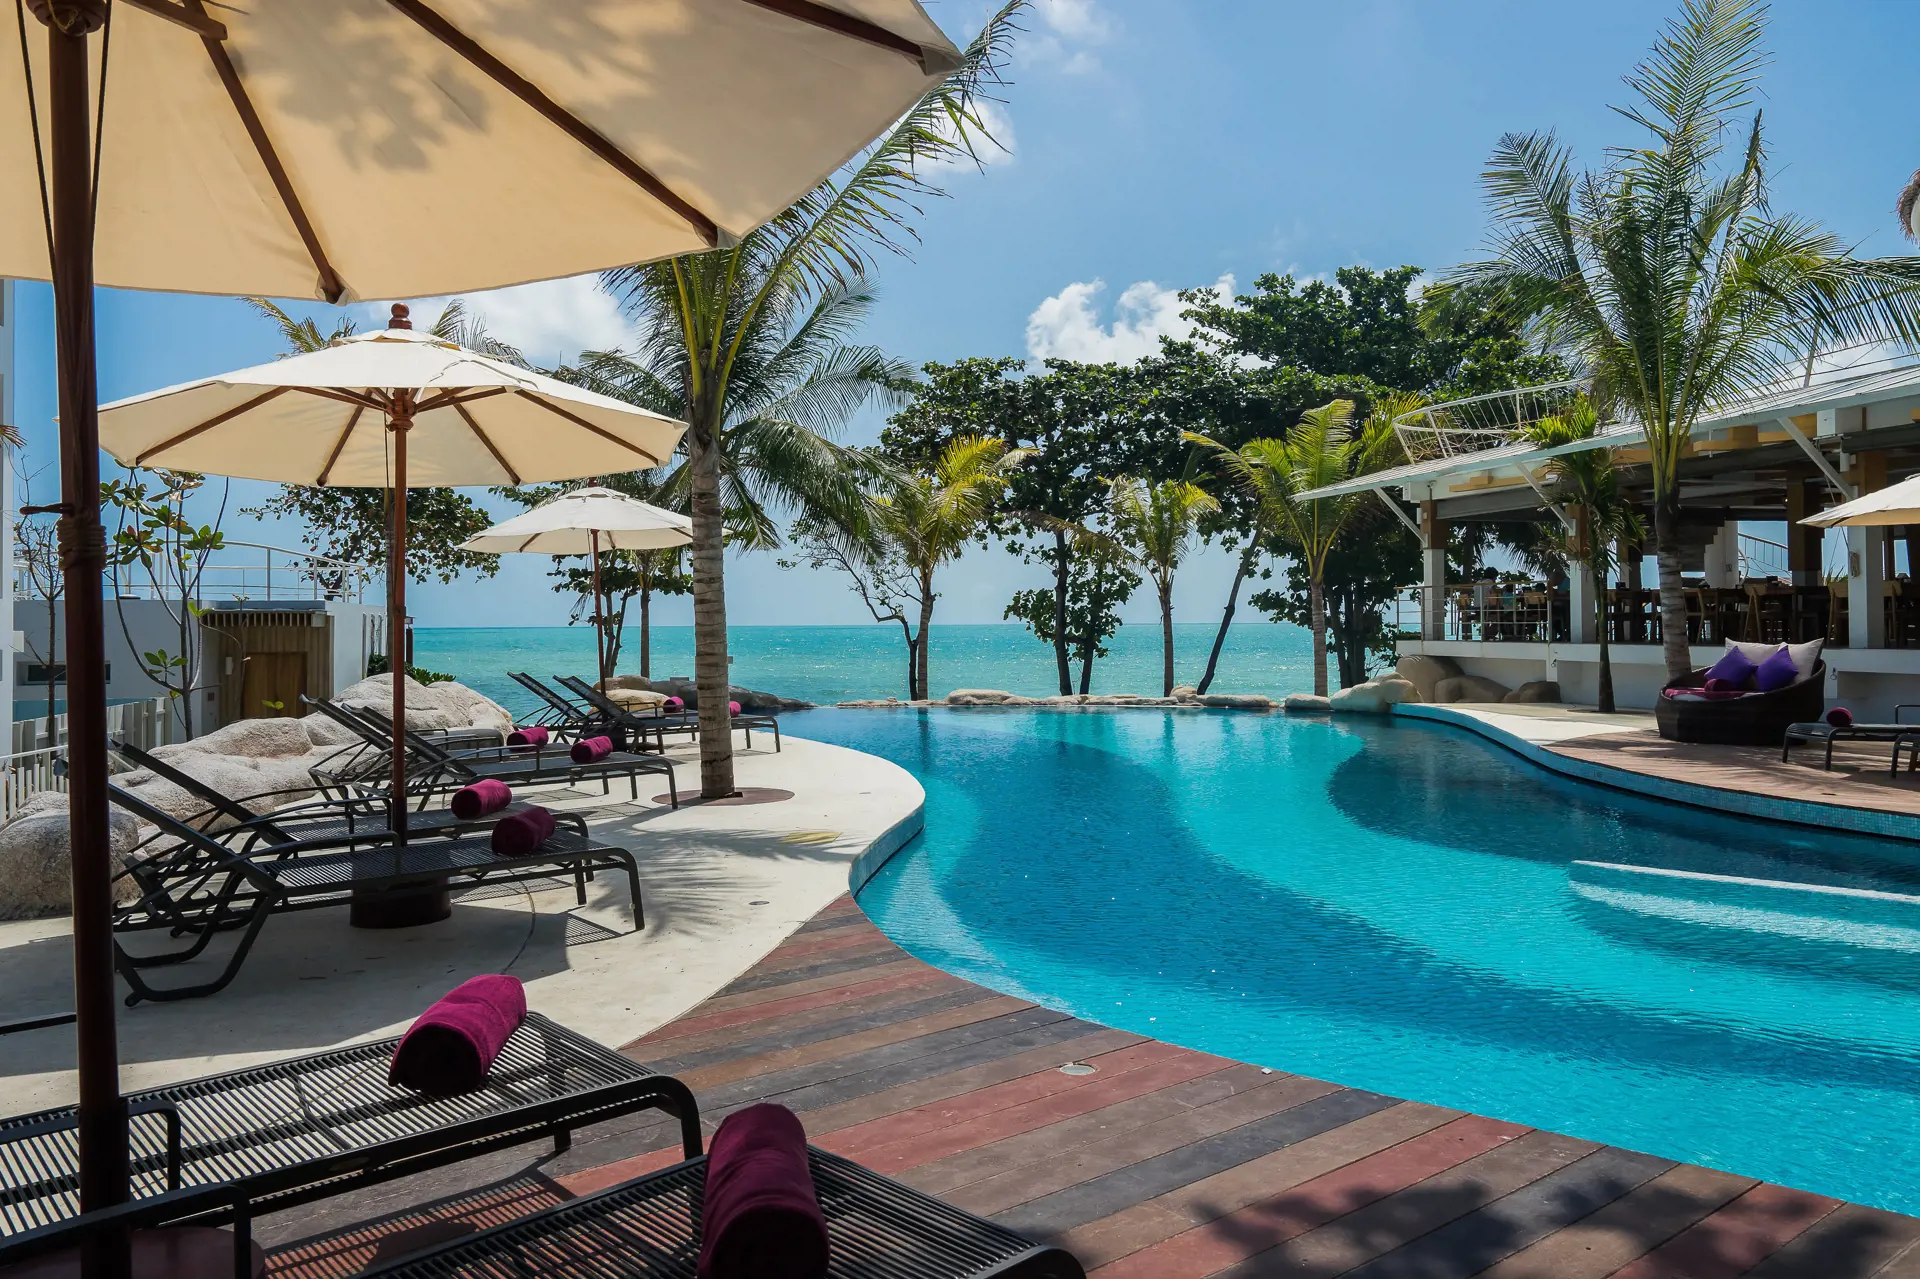 BADEFERIE - Tag til Koh Samui og Koh Phangan og bo på to lækre hoteller direkte på stranden.